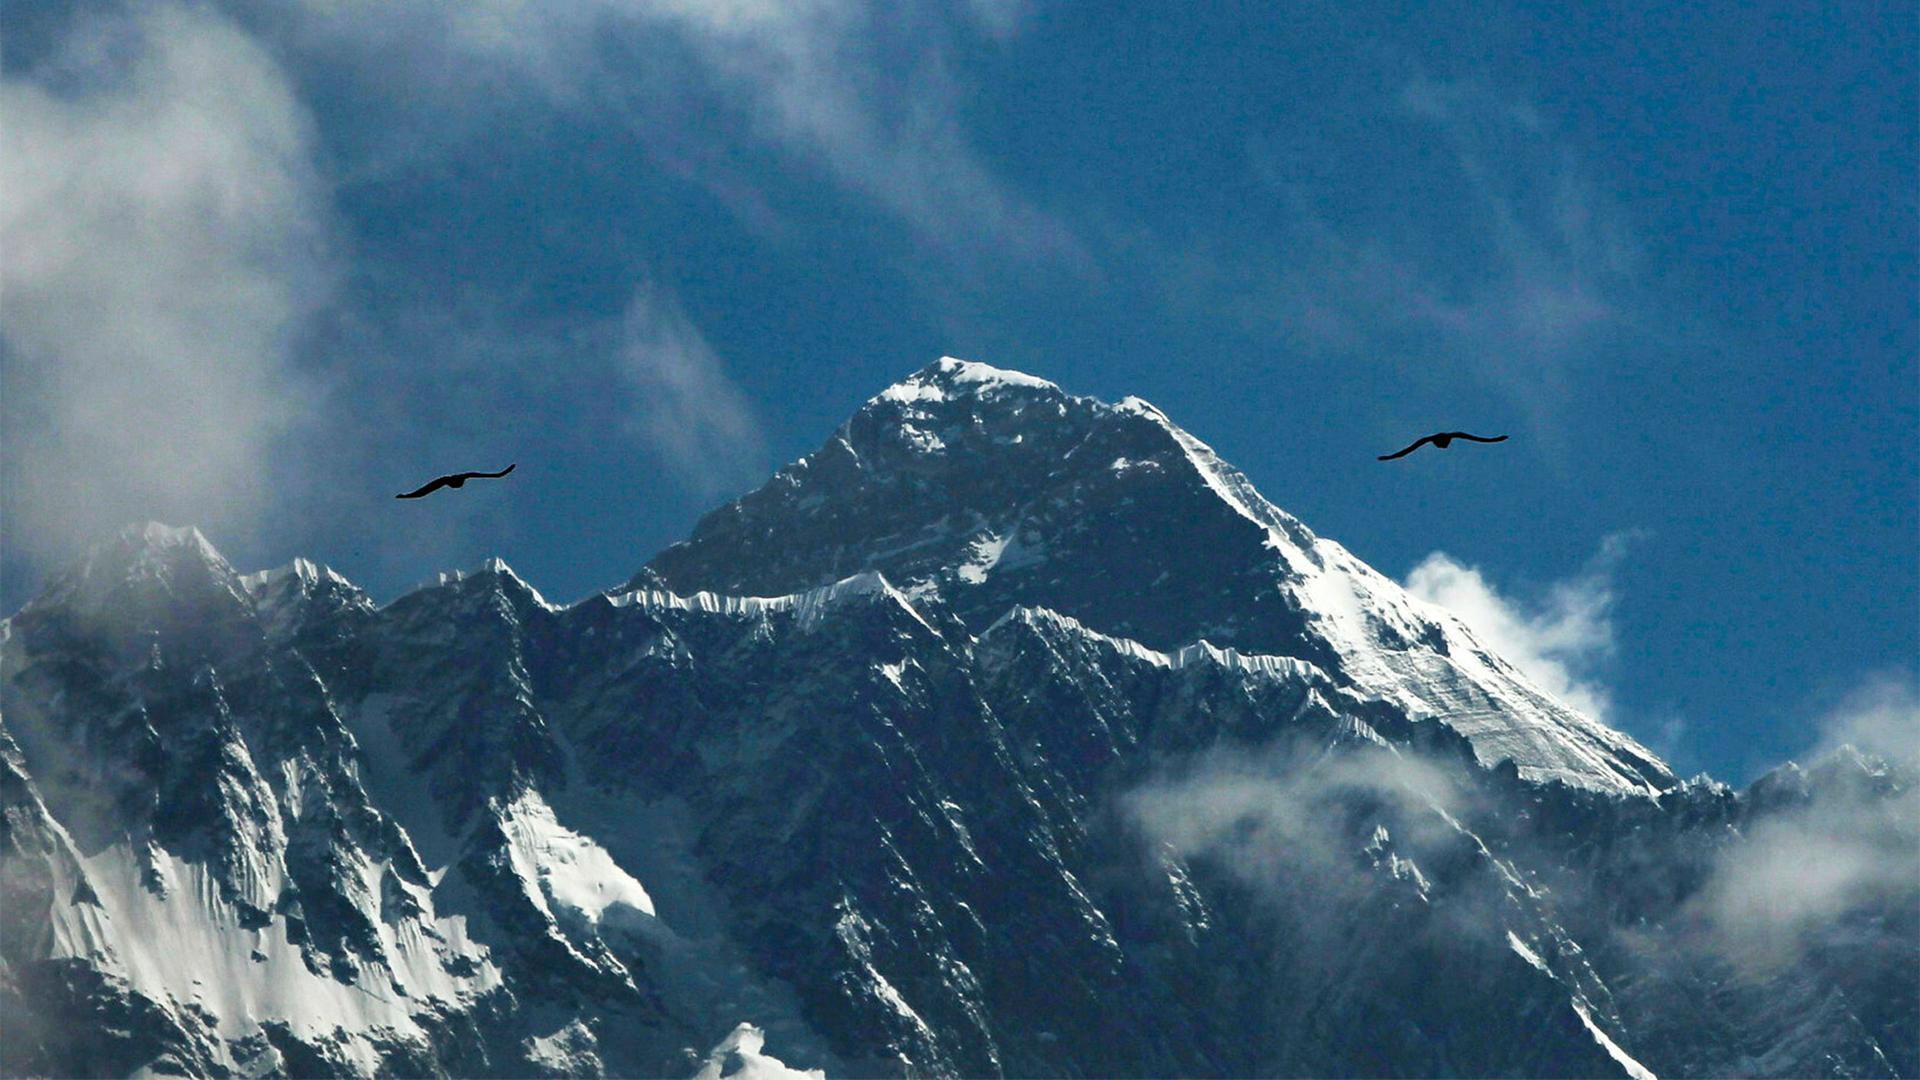 Birds fly above Mount Everest against a blue sky